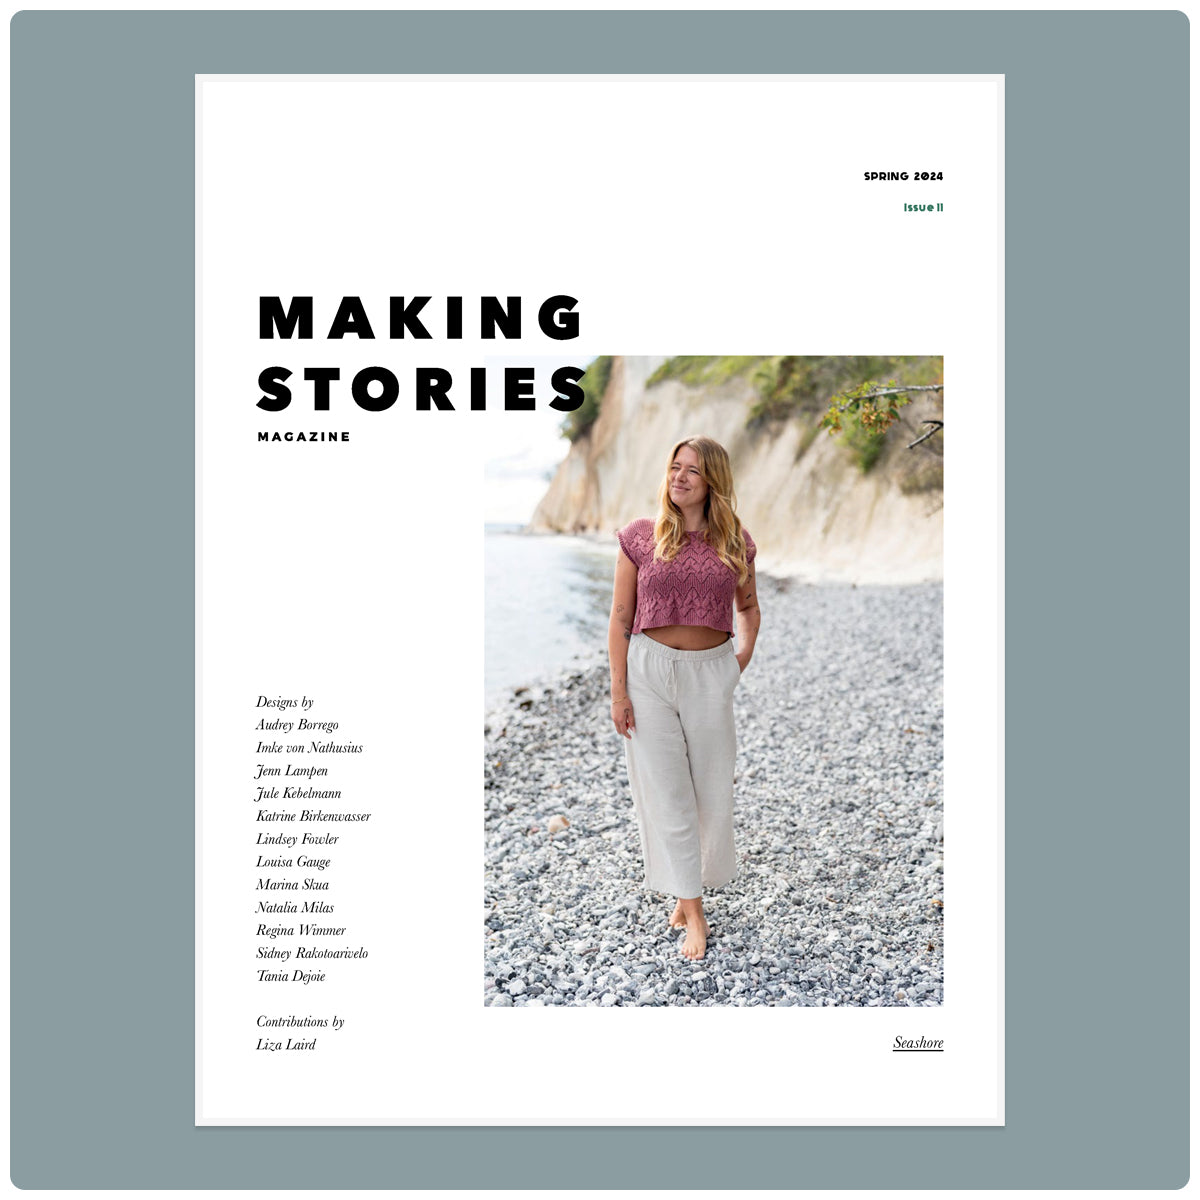 Making Stories, Issue 11 / Seashore